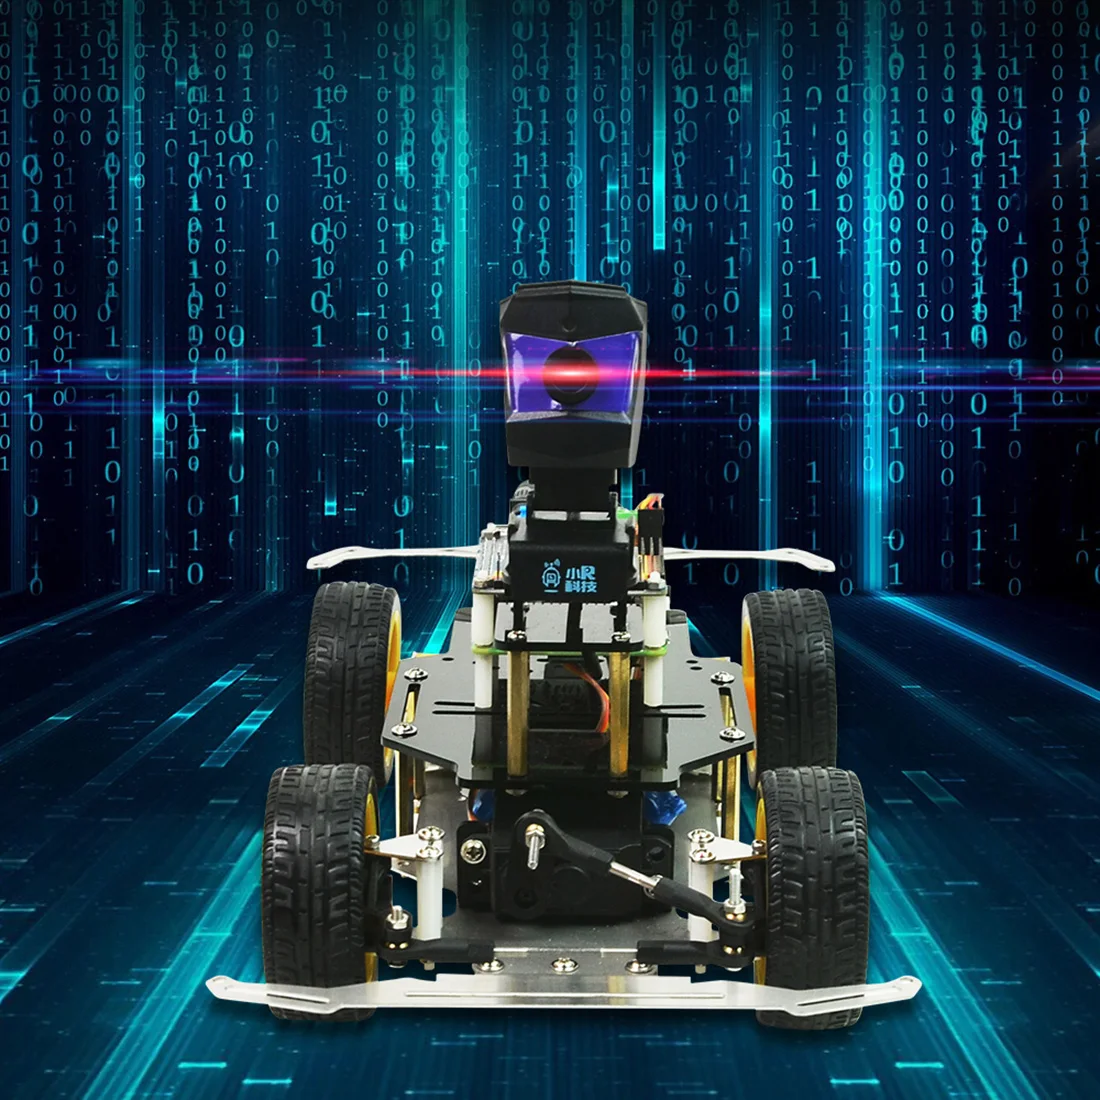  NFSTRIKE Donkey Car Smart AI Line Follower Robot Opensource DIY Self Driving Platform For Raspberry - 33050428178